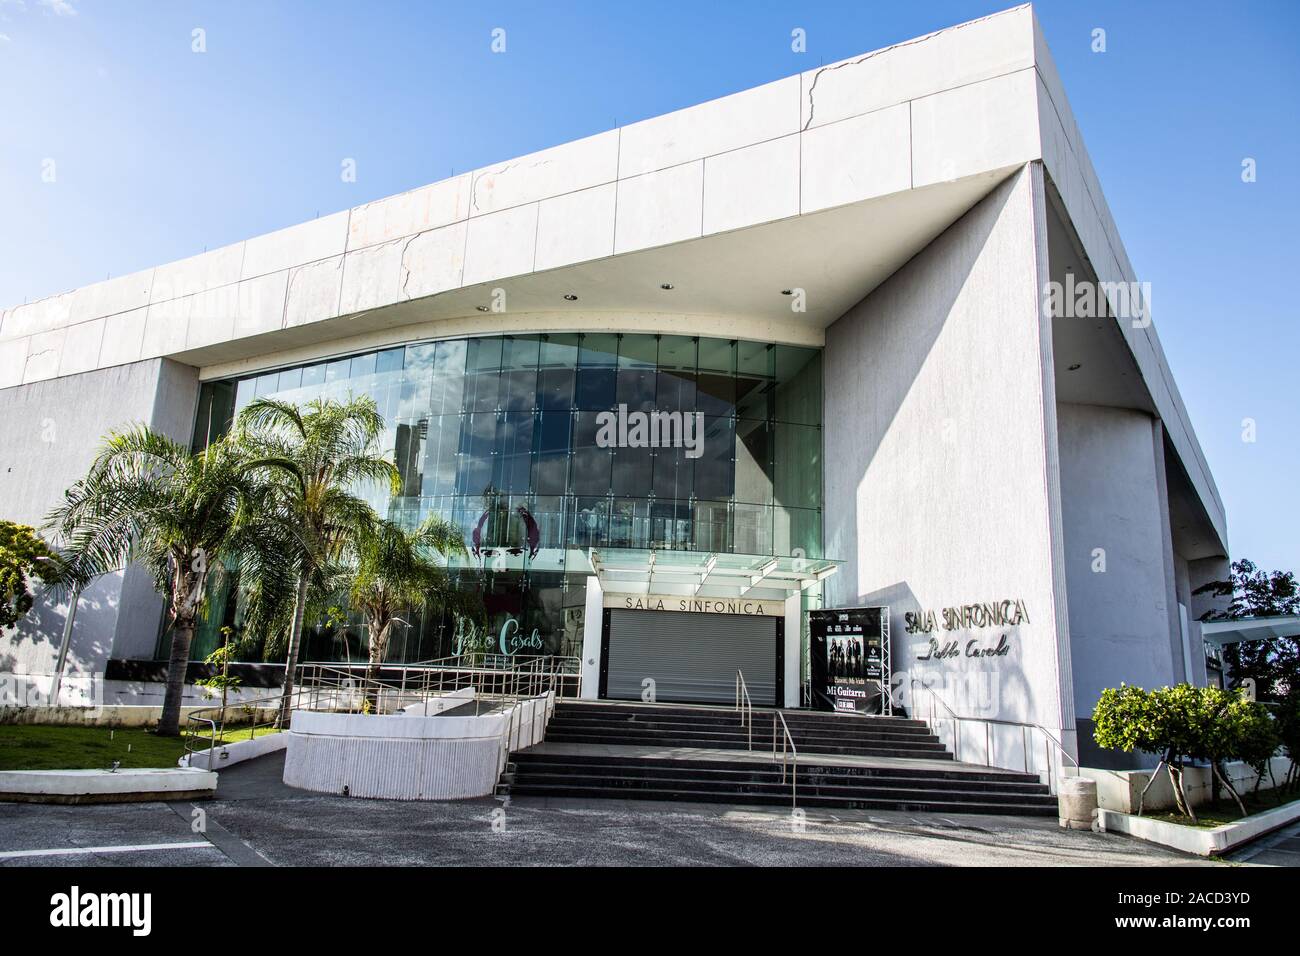 Symphony Hall, Sala Sinfonica, Luis A. Ferré Performing Arts Center, San Juan, Puerto Rico Stockfoto